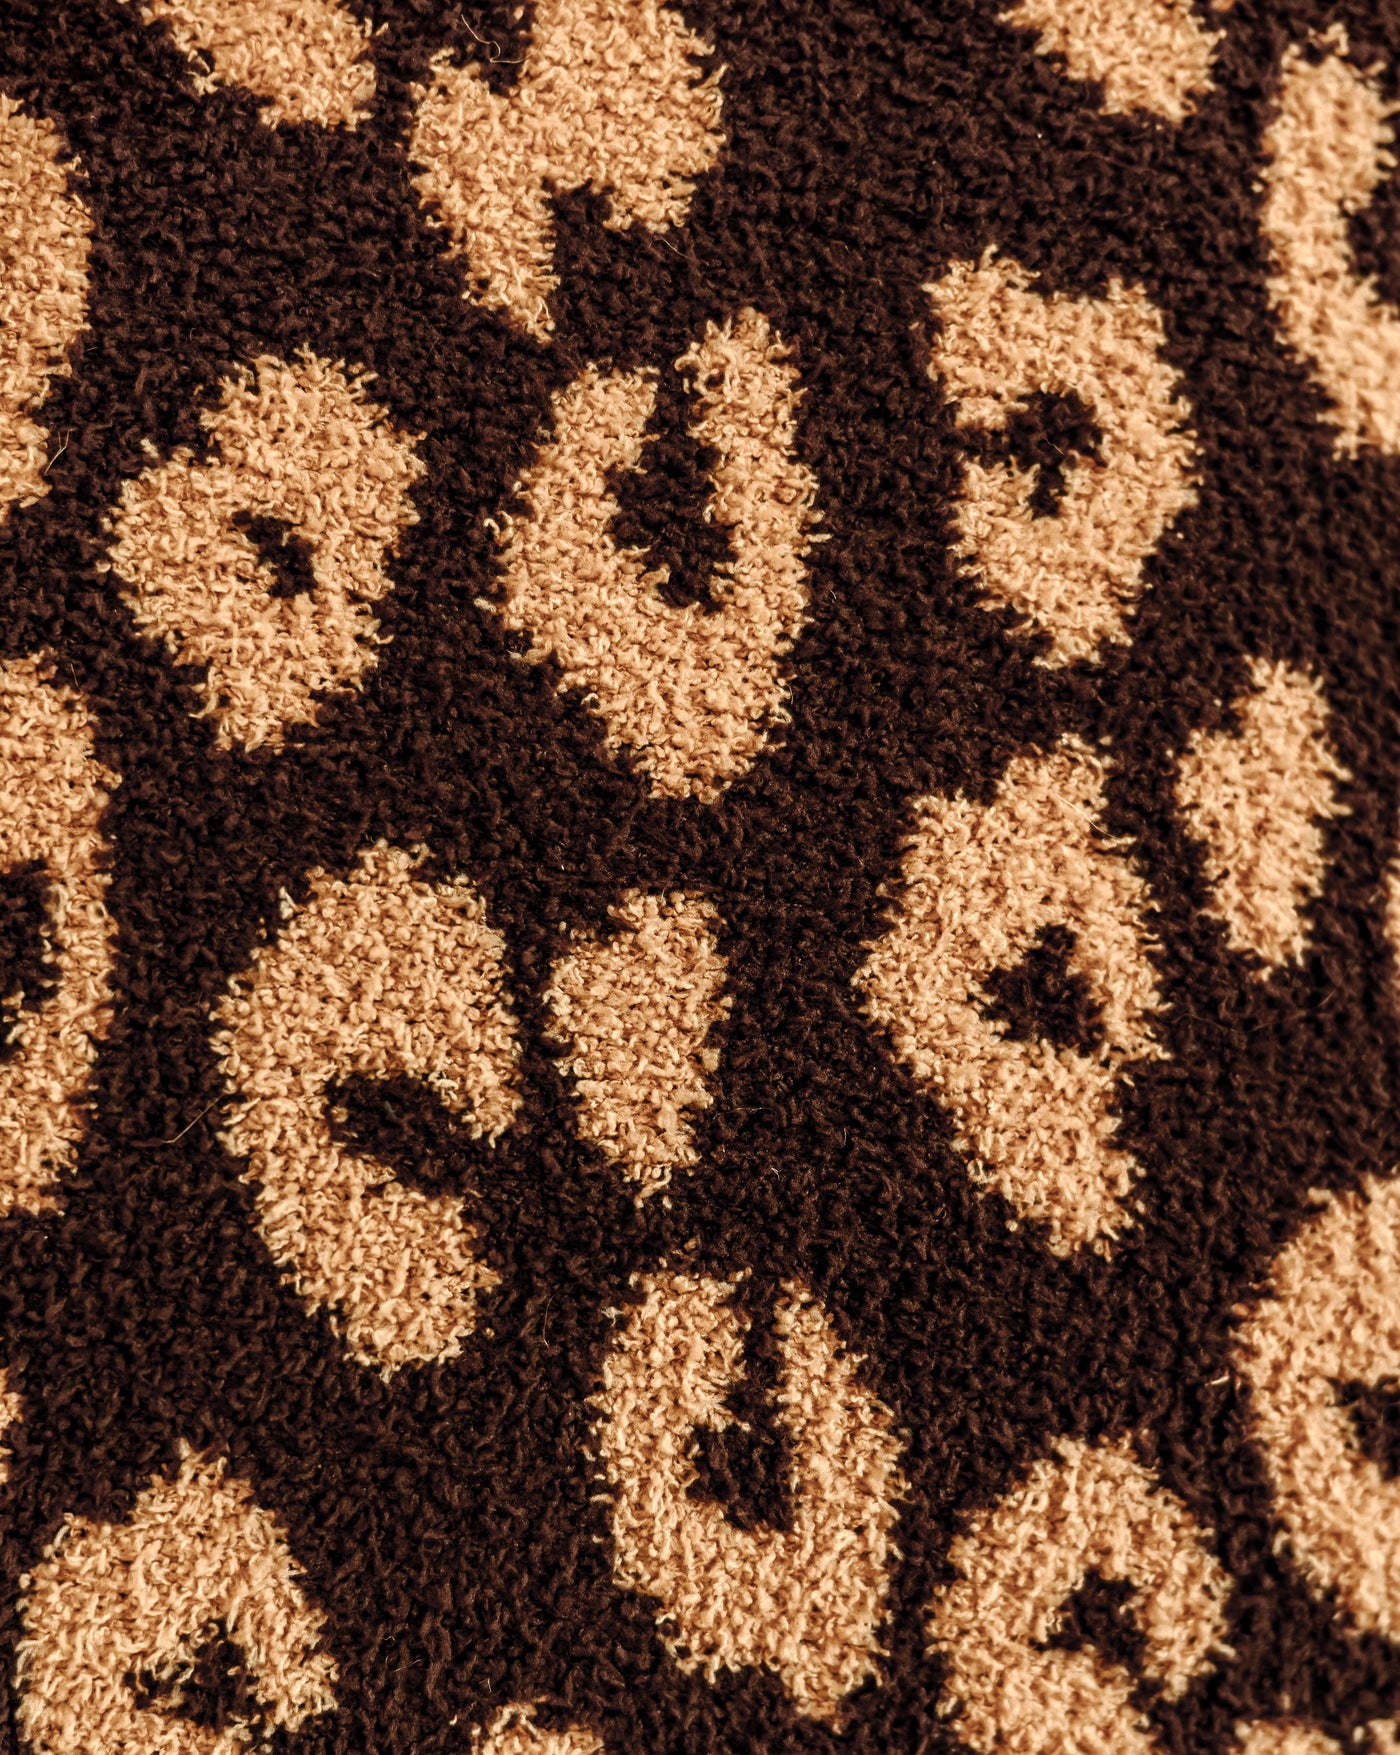 Snuggle Knit Brown Leopard Dog Bed